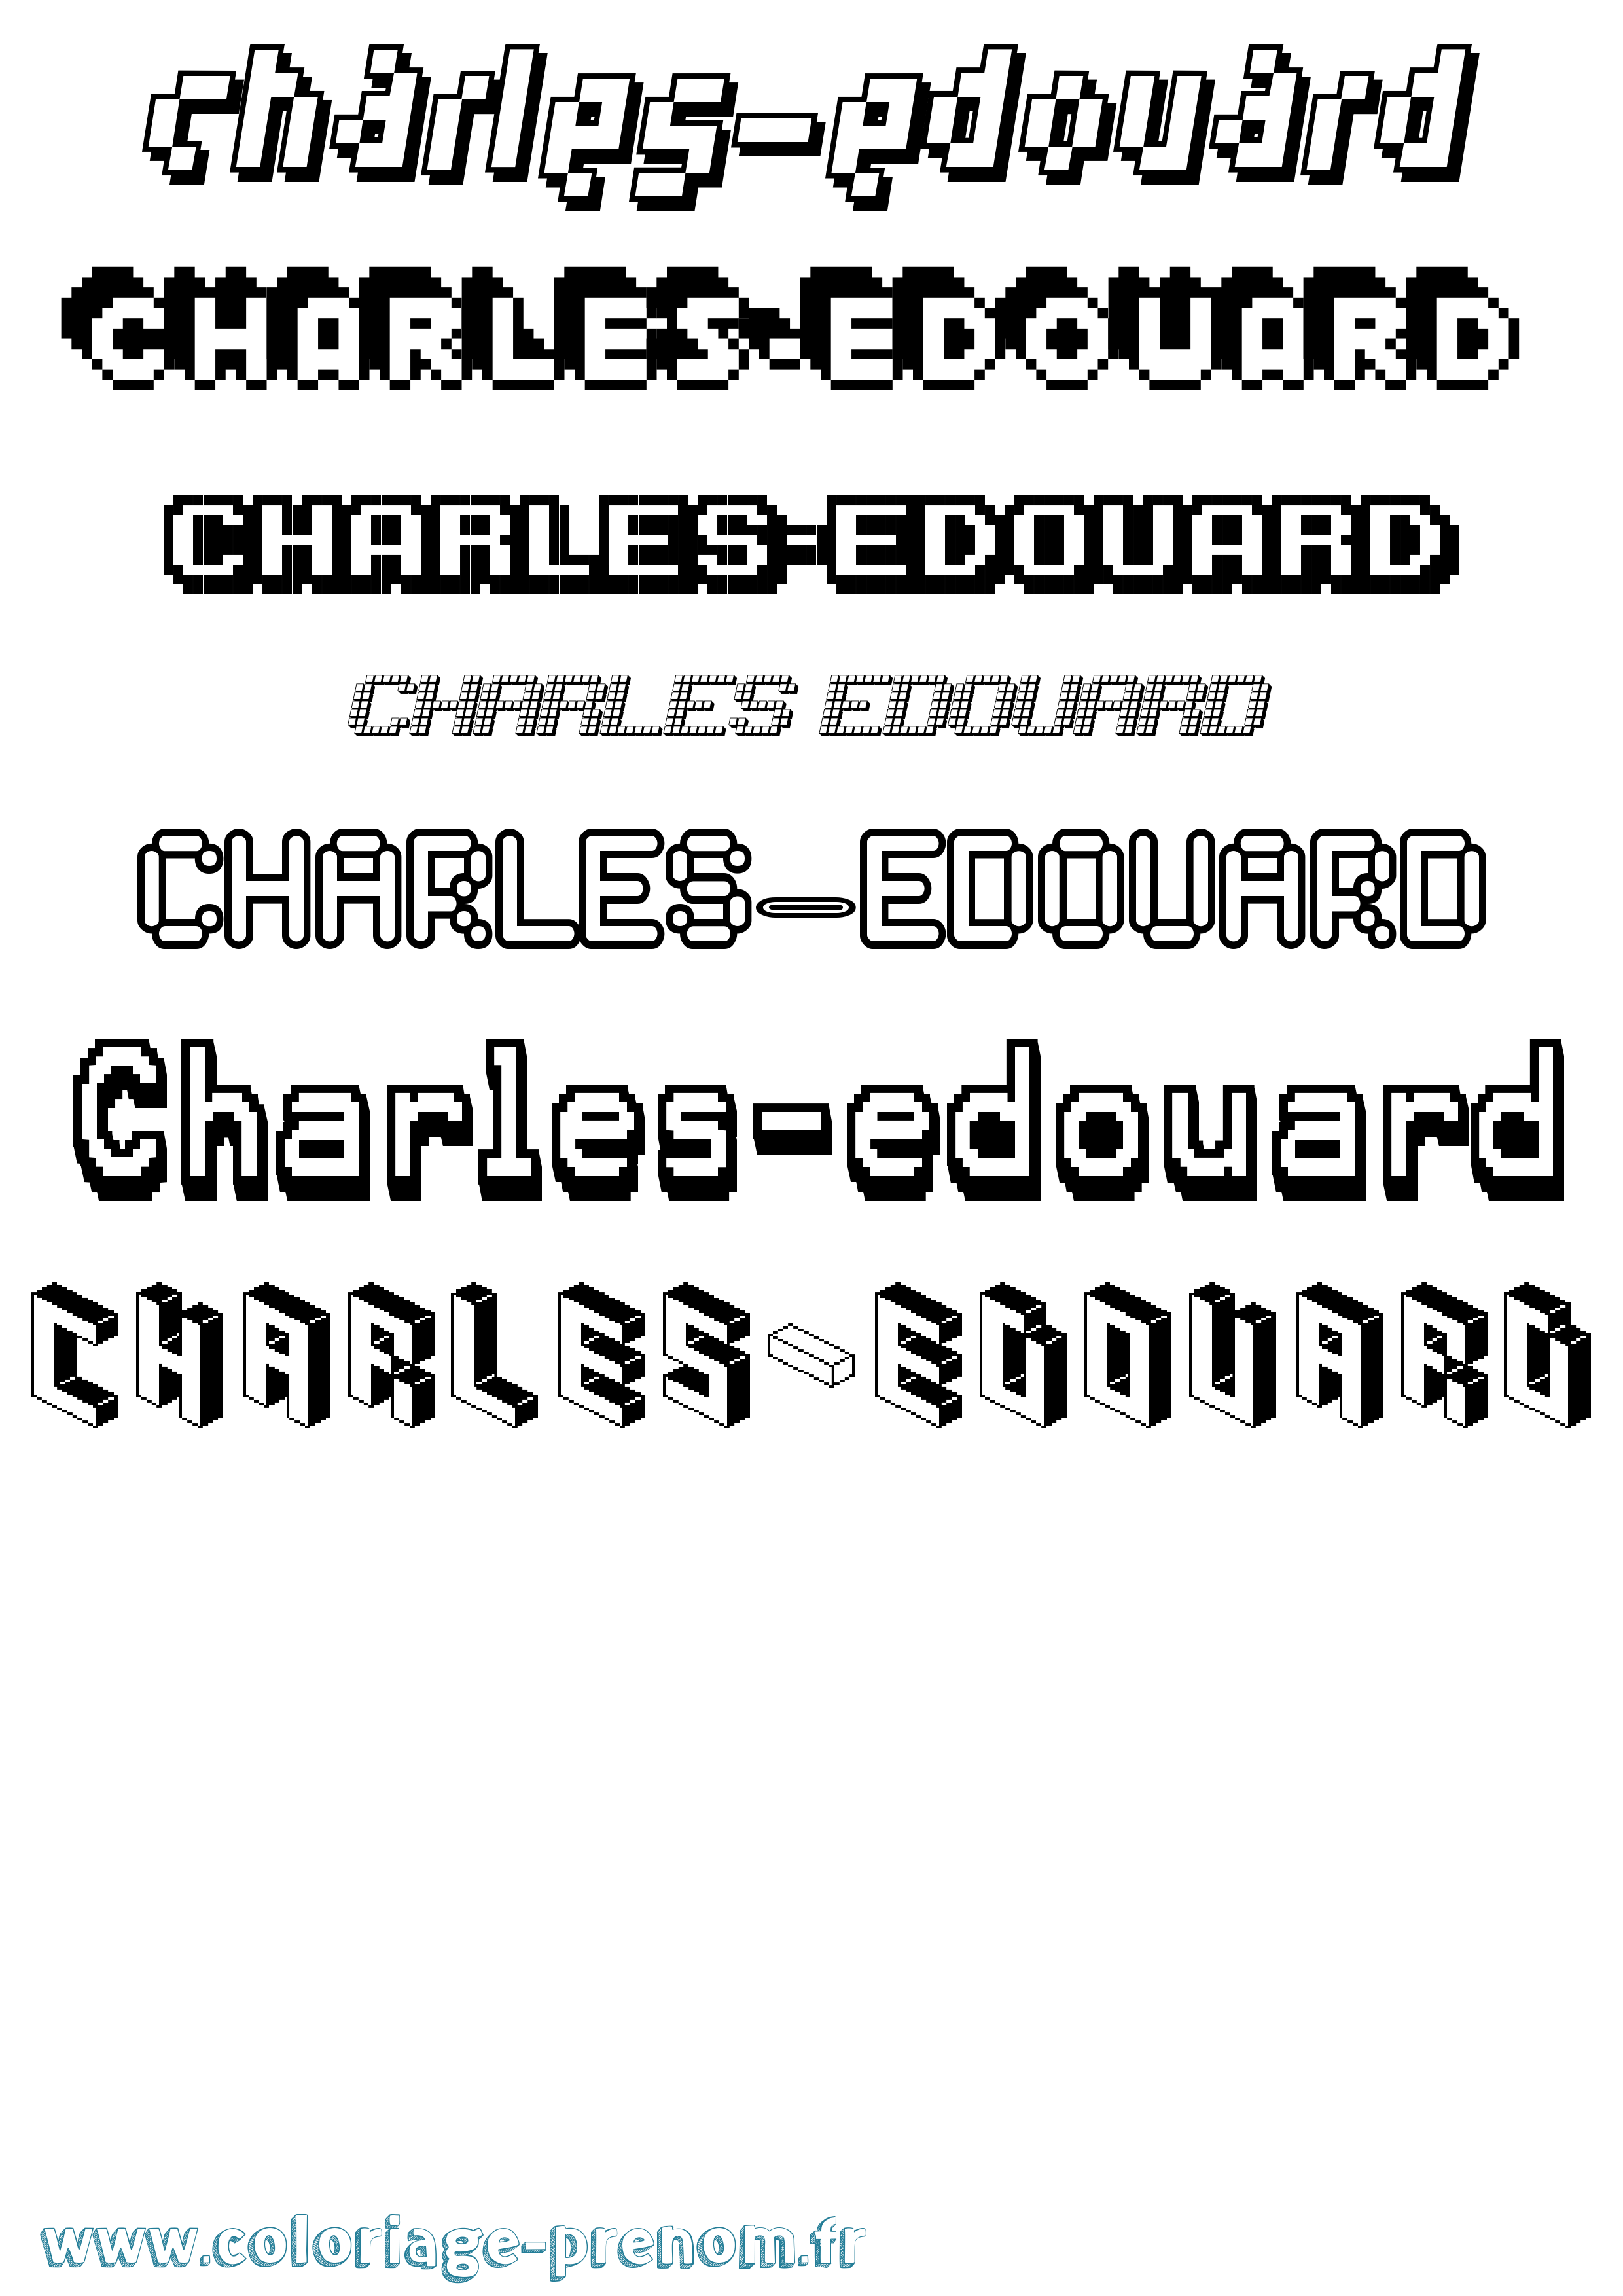 Coloriage prénom Charles-Edouard Pixel